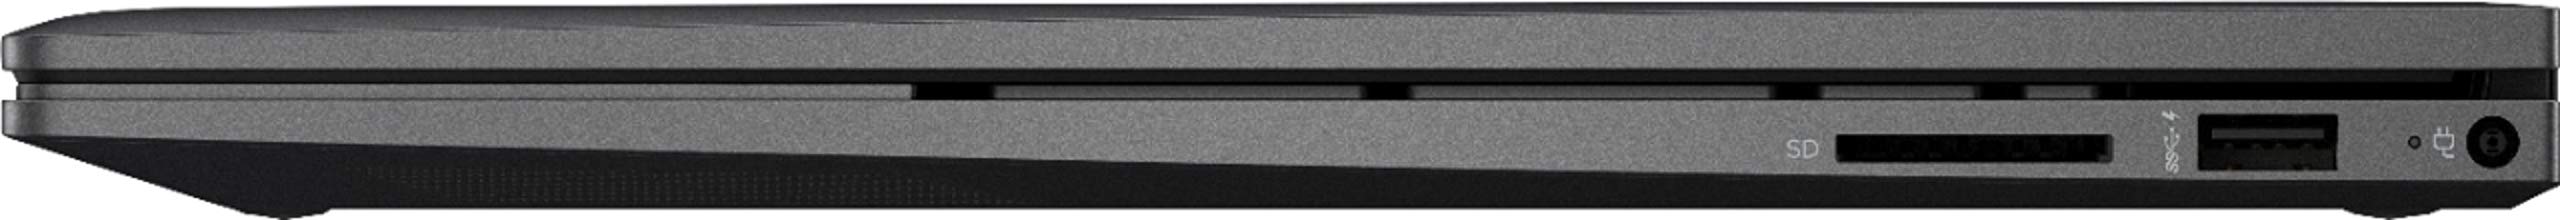 HP Envy X360 15 2 in 1 Laptop 15.6" FHD IPS Touchscreen AMD Octa-Core Ryzen 7 4700U (Beats i7-10510U) 16GB RAM 1TB SSD Backlit Fingerprint USB-C B&O Pen Win10 + HDMI Cable